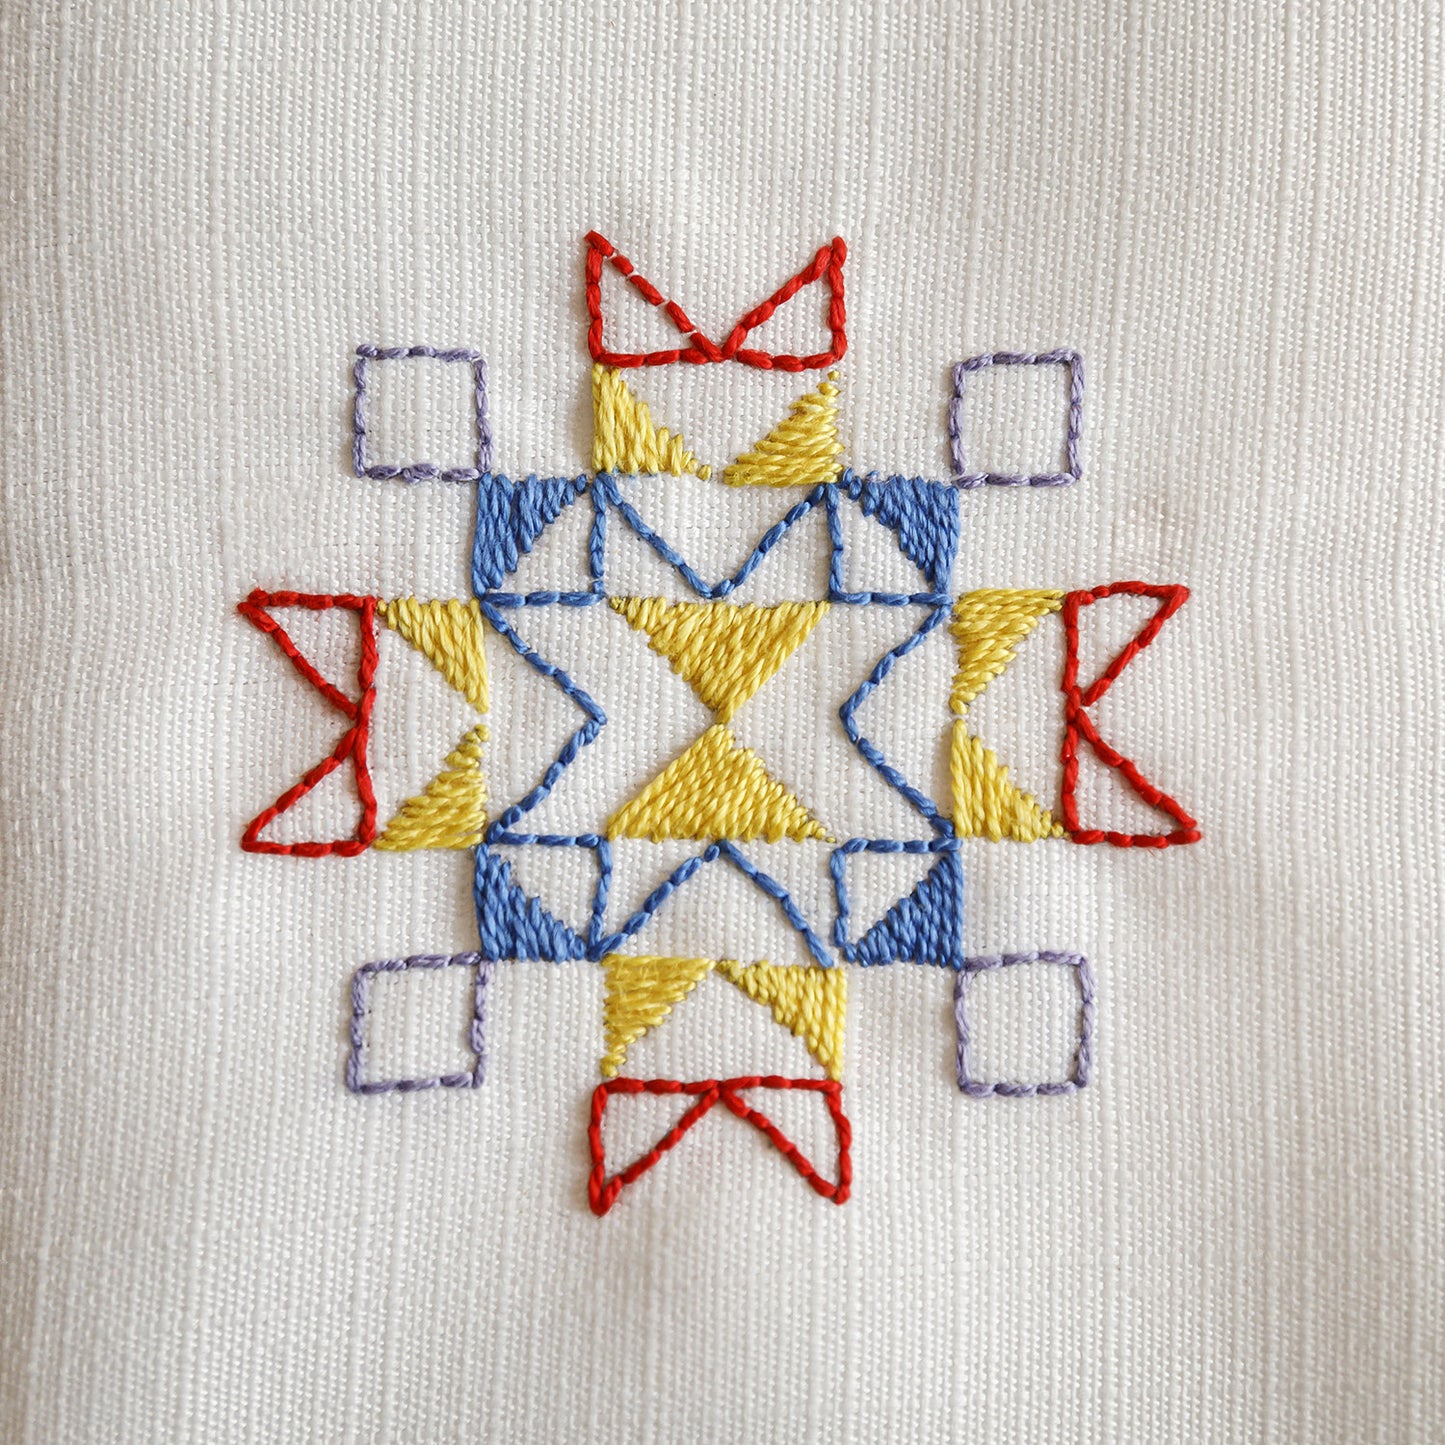 PREORDER - Learn Embroidery Stitch by Stitch with Missouri Star Alternative View #18